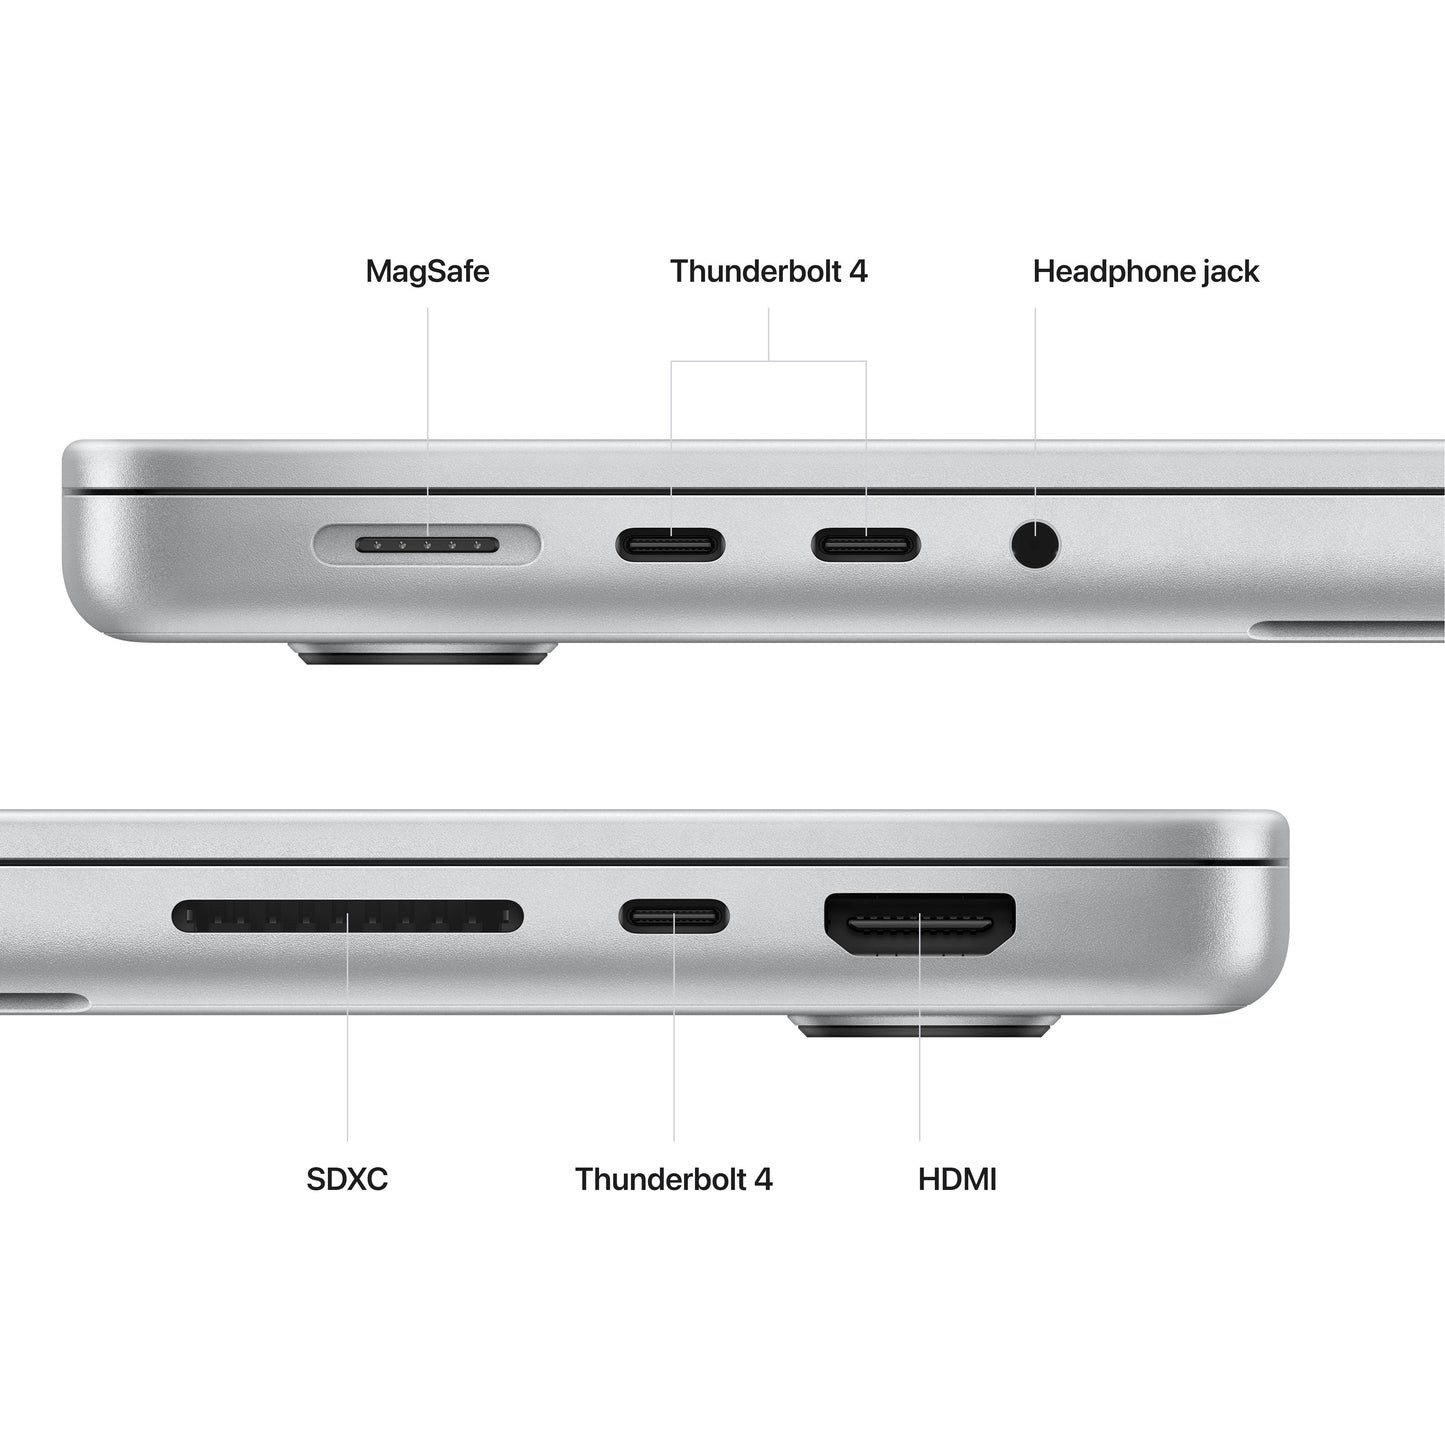 "14-inch MacBook Pro: Apple M2 Pro chip with 10-core CPU and 16-core GPU, 512GB SSD - Silver"